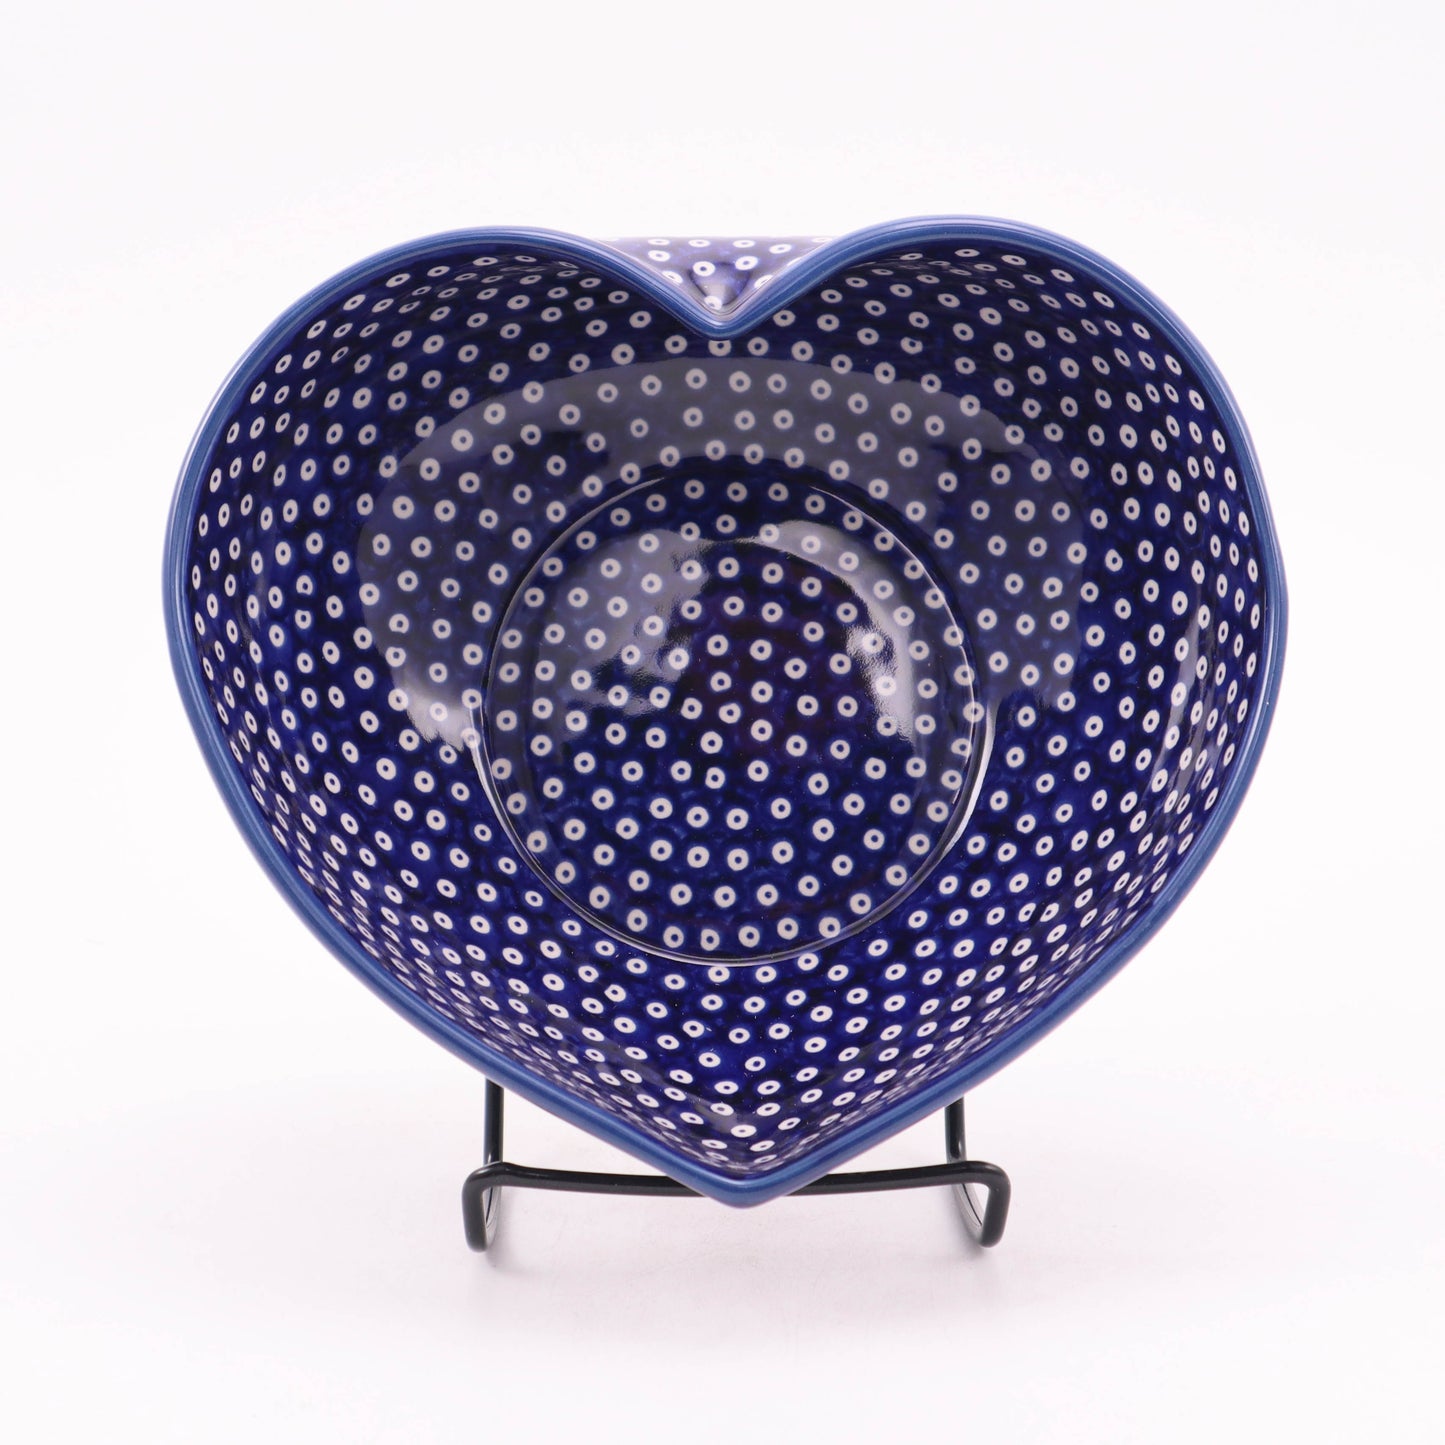 7"x6.5" Heart Bowl. Pattern: Owl Eye